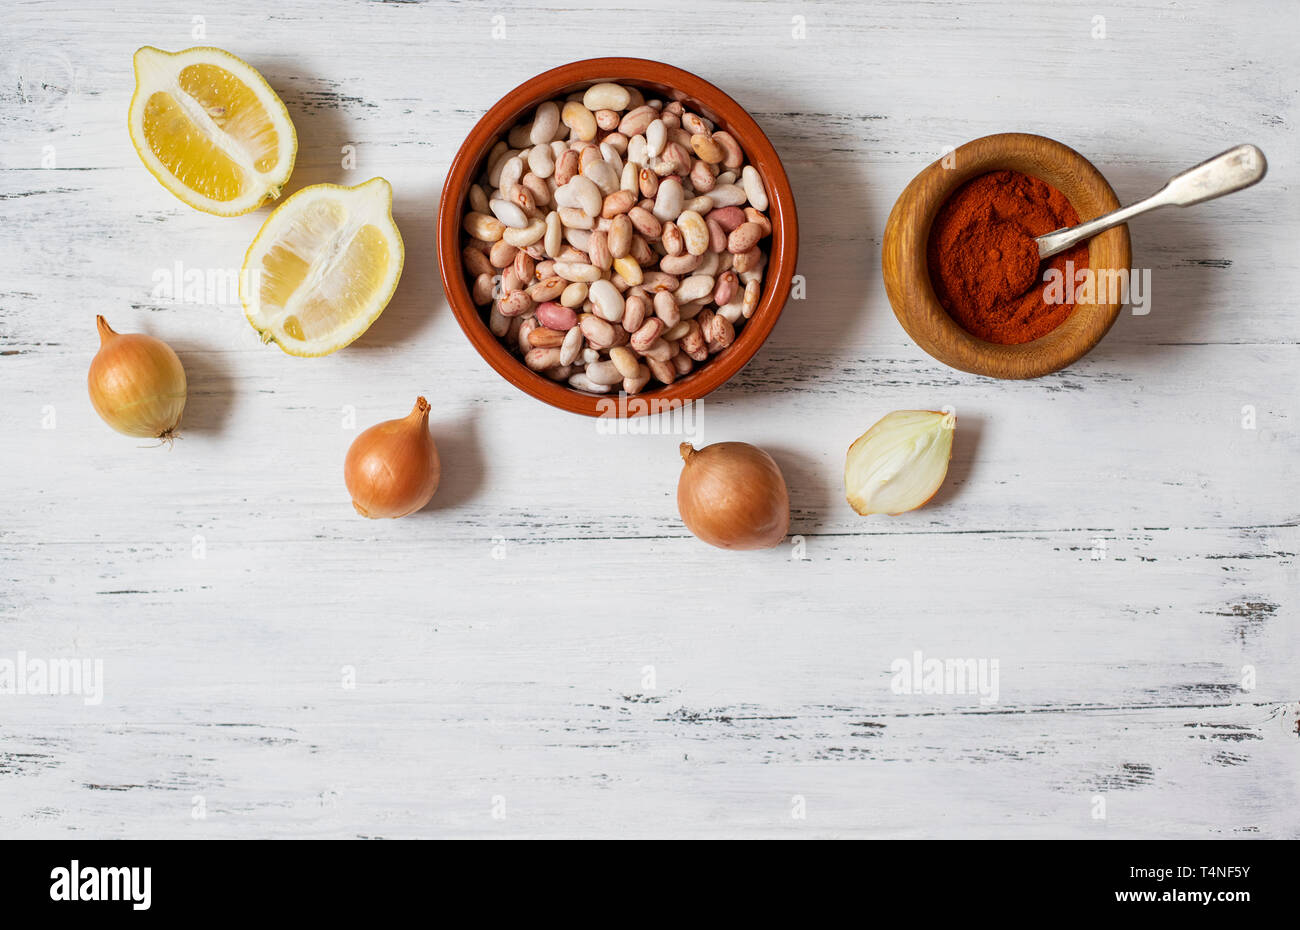 Prebranac ingredients. Balkan baked beans. Serbian, Montenegrin, Bosnian, Croatian, Slovenian cuisine. Uncooked beans, onion, lemon, paprika powder Stock Photo